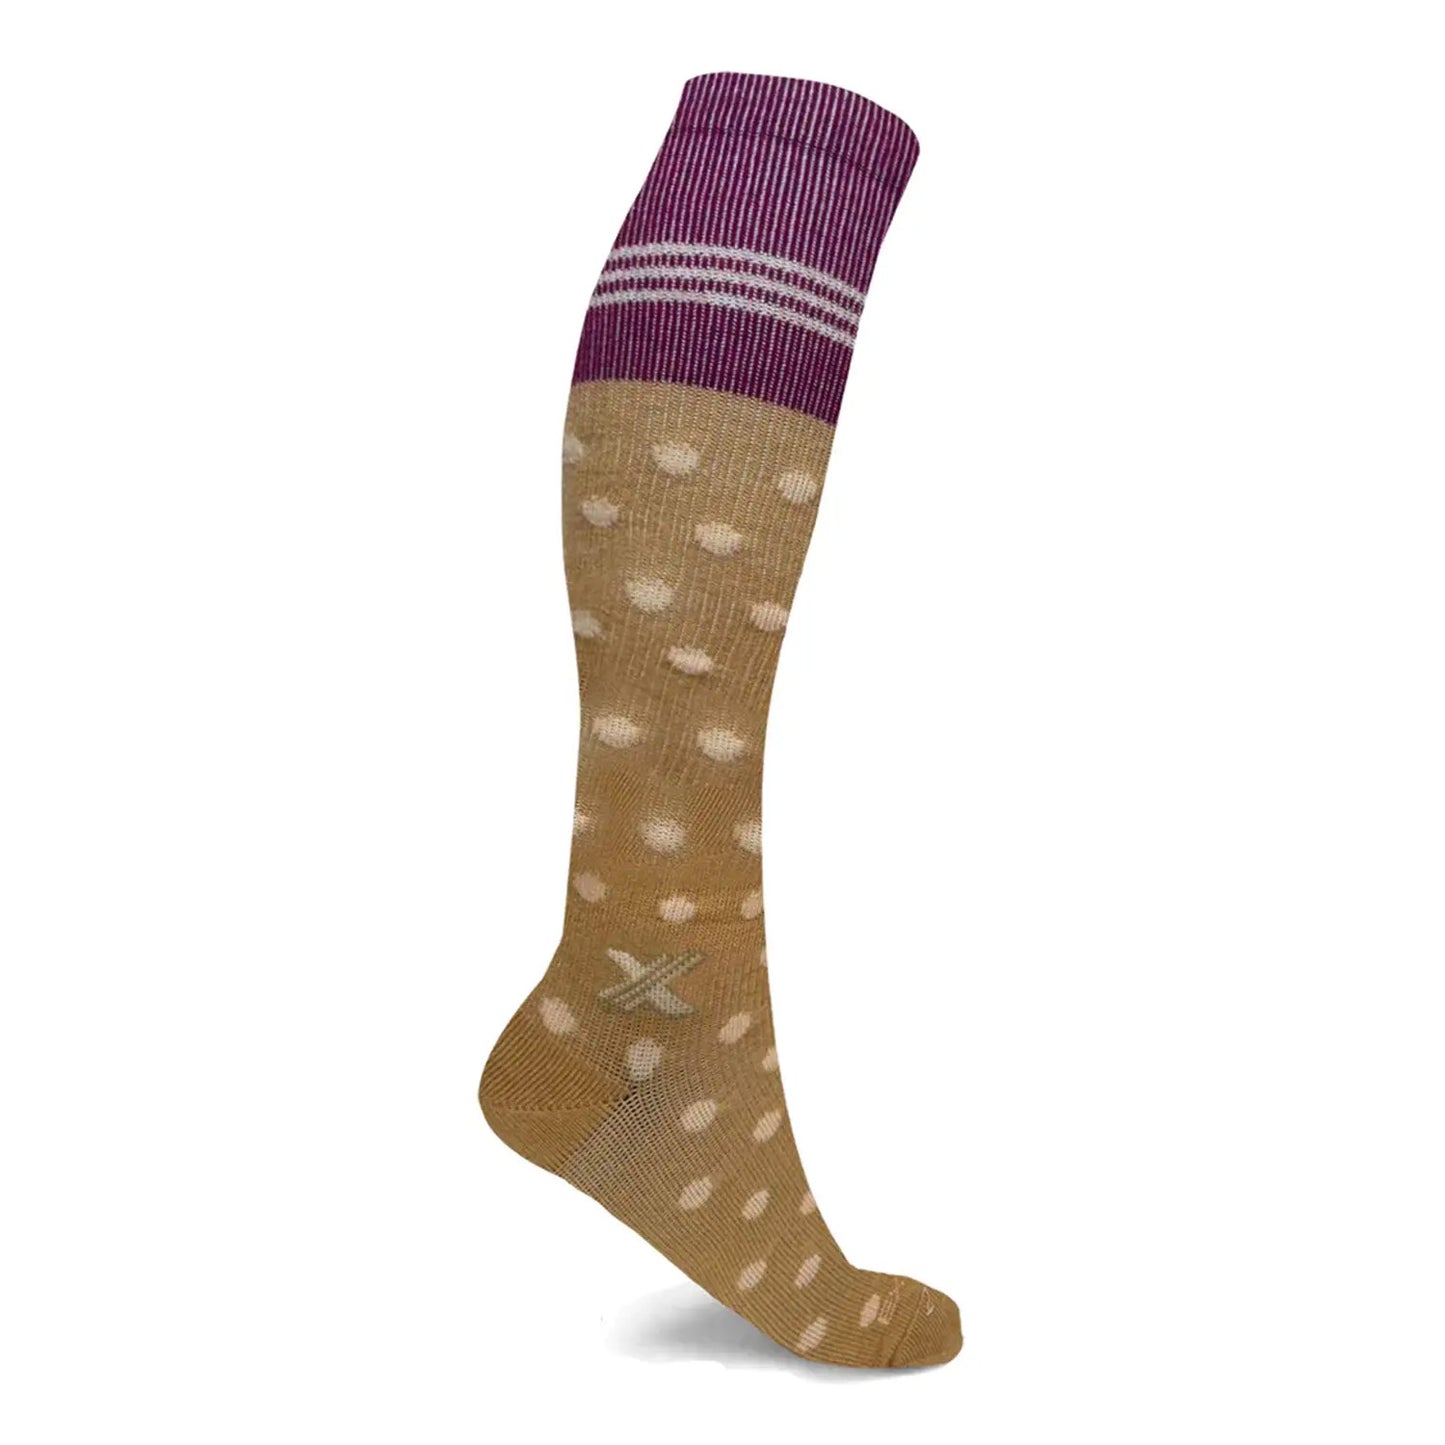 Merino Wool Socks by Happy Wool